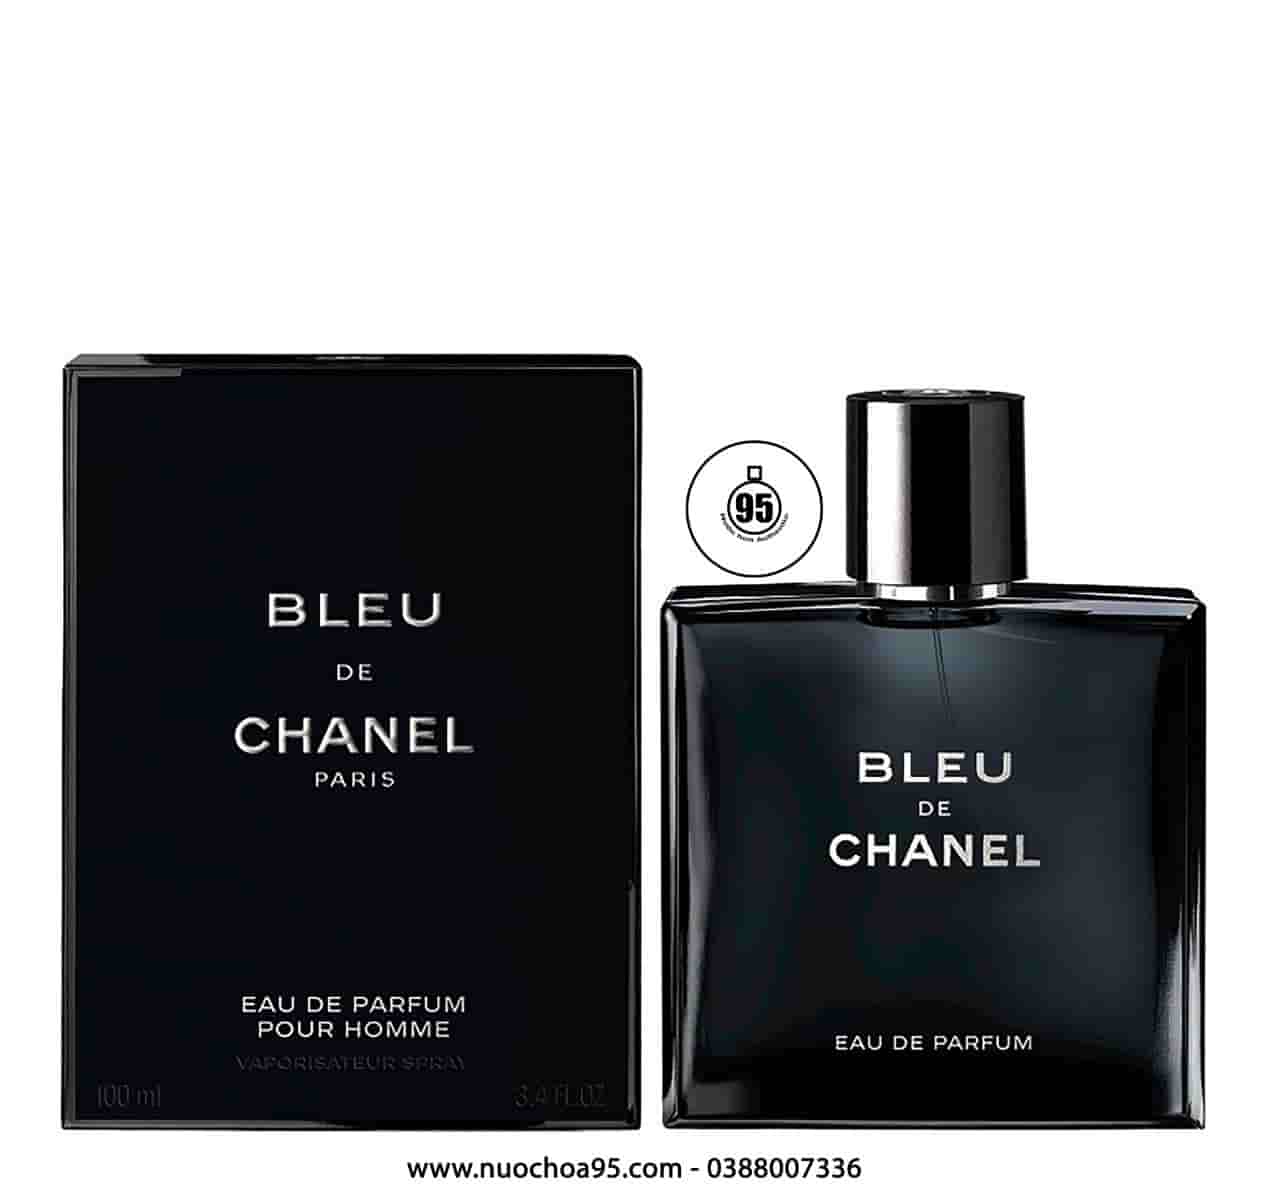 Nước hoa Chanel Bleu Eau de Parfum